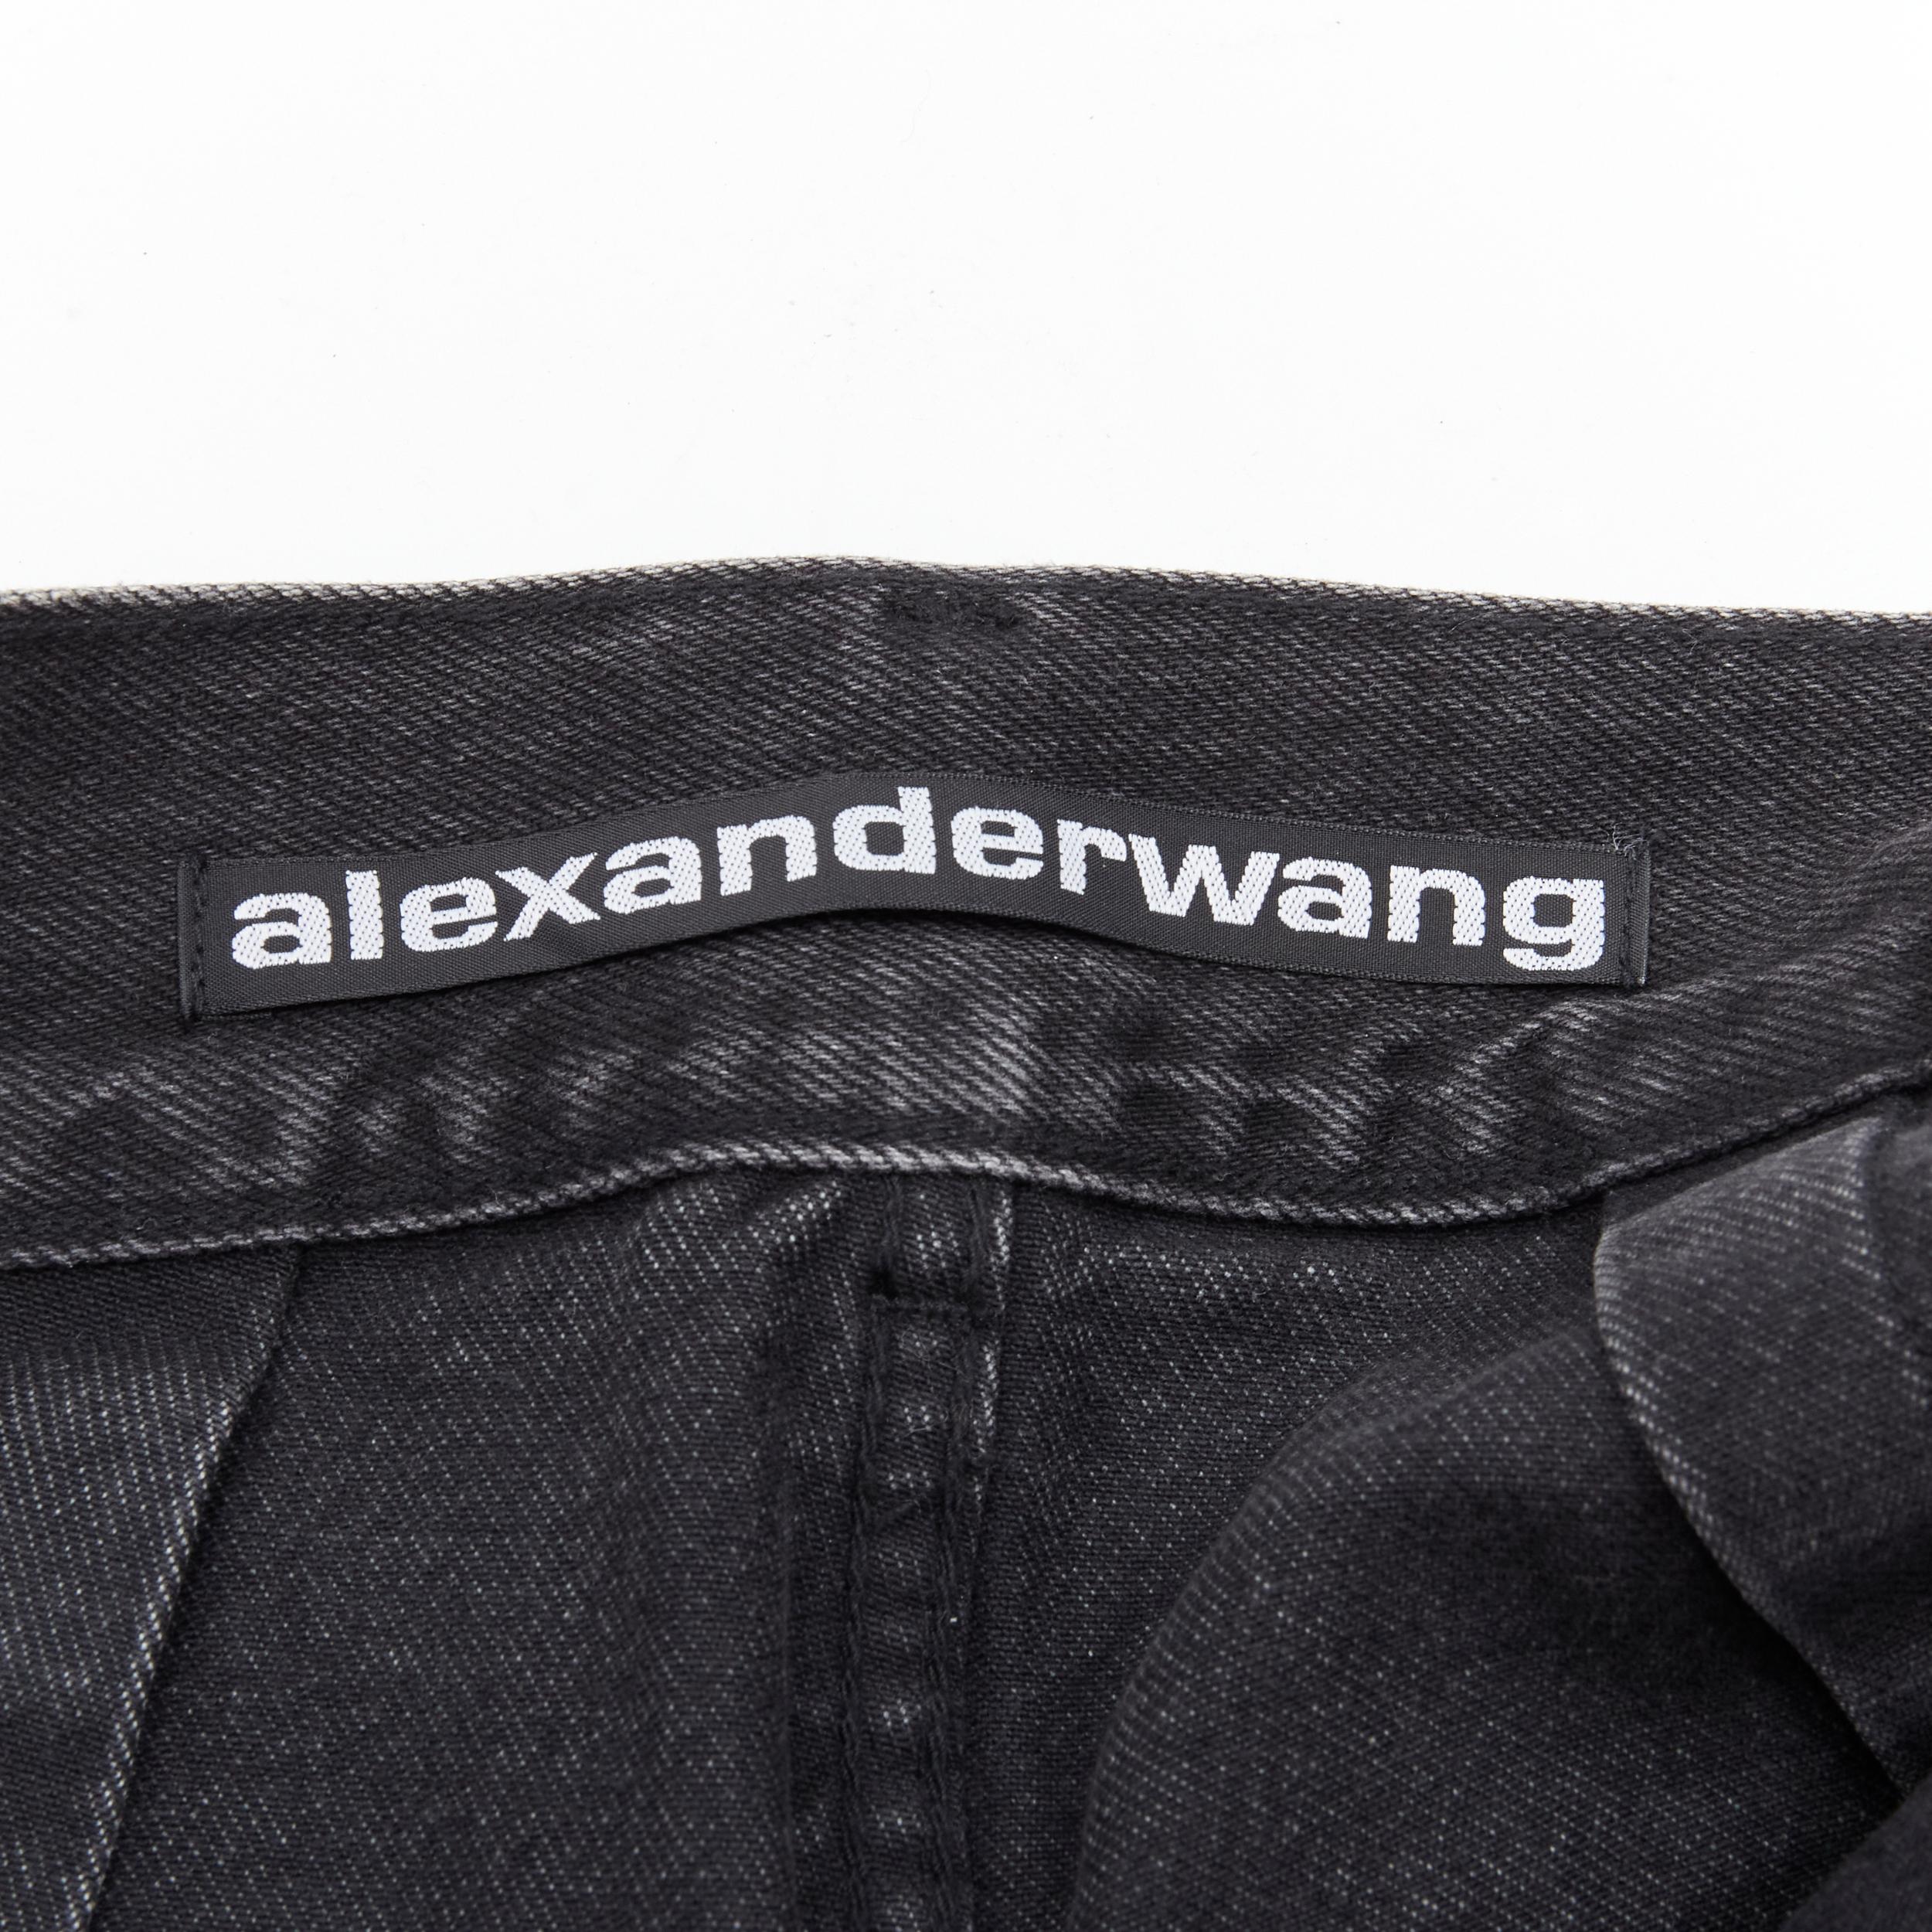 ALEXANDER WANG black washed denim silver buckle cut off frayed shorts 24